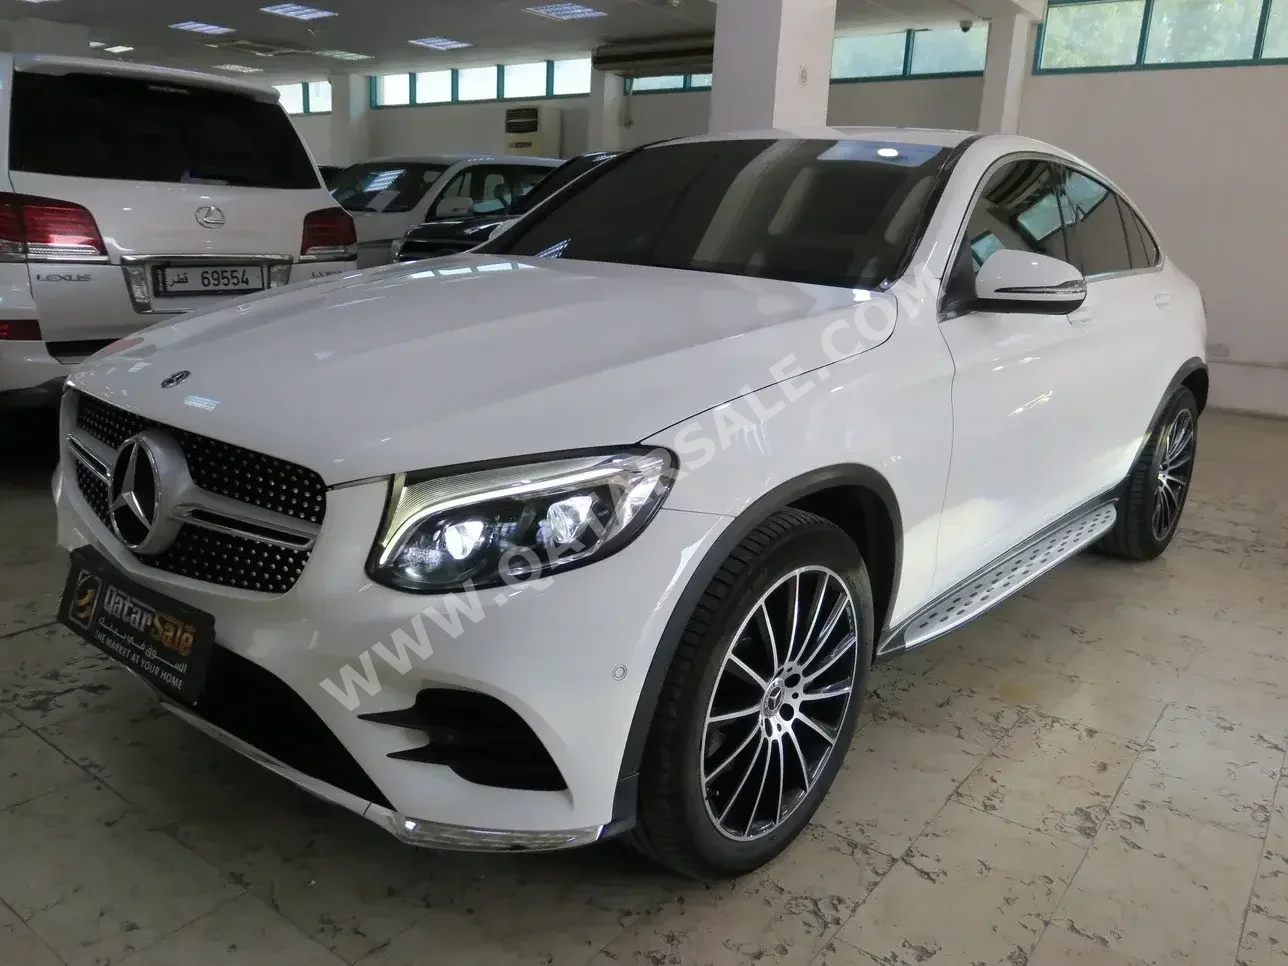 Mercedes-Benz  GLC  250  2018  Automatic  68,000 Km  4 Cylinder  Four Wheel Drive (4WD)  SUV  White